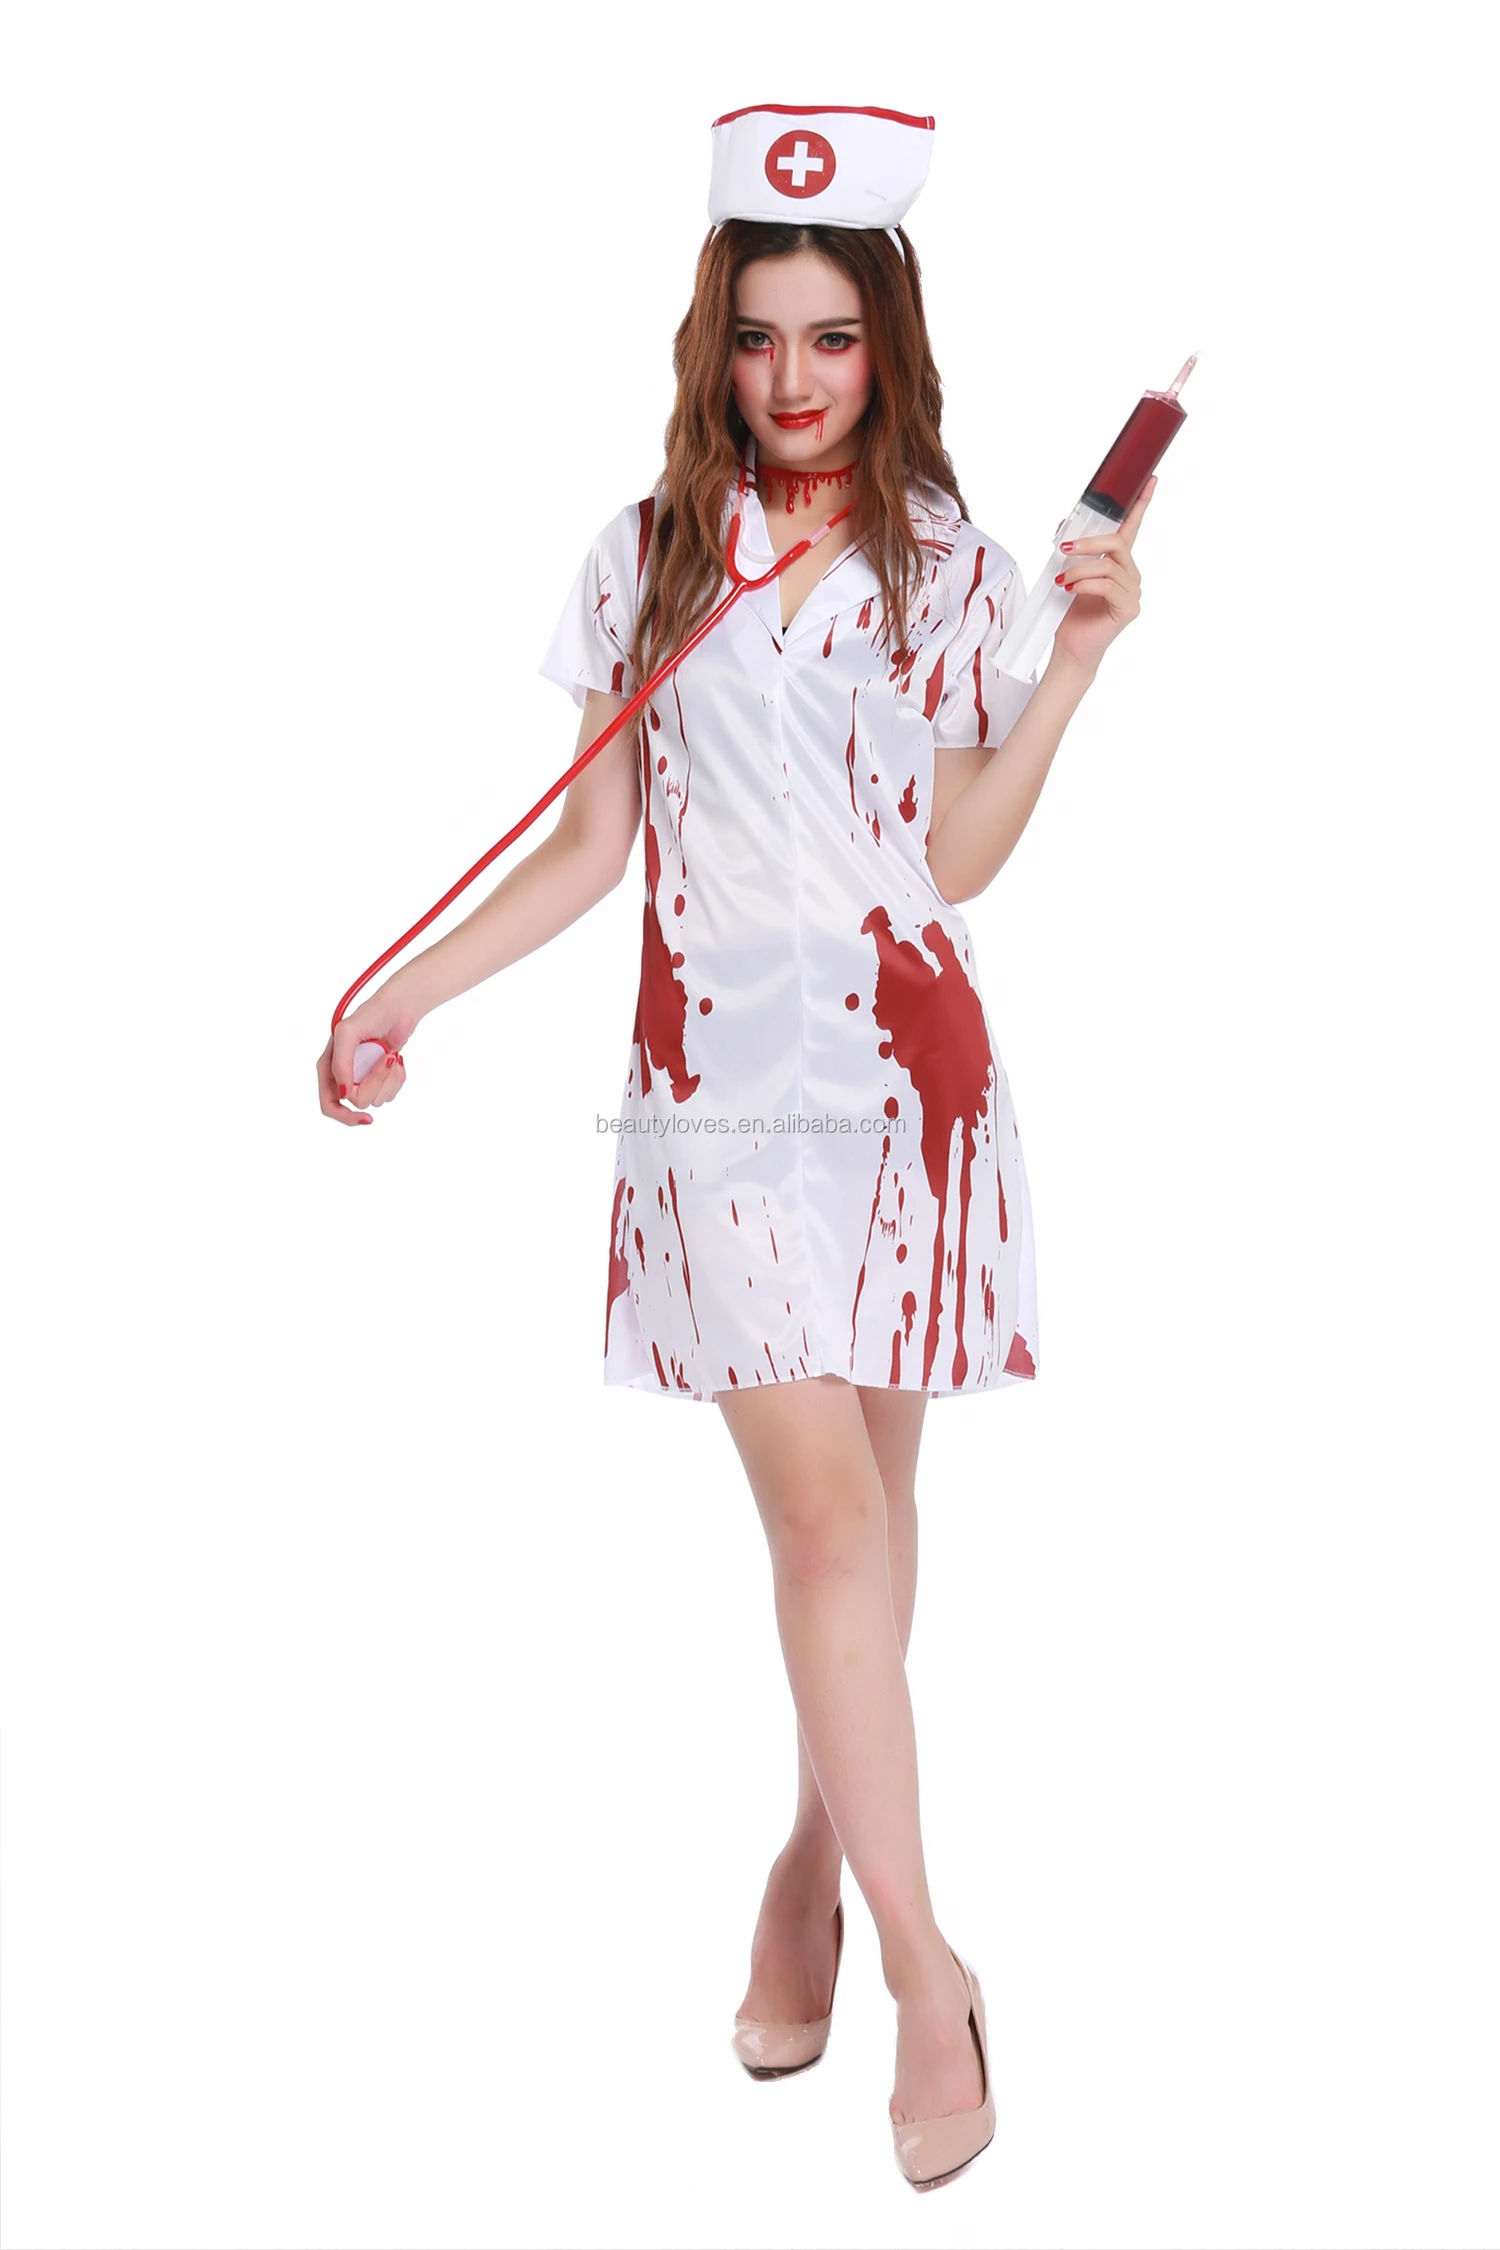 Sexy Zombie Nurse Ideas For Halloween